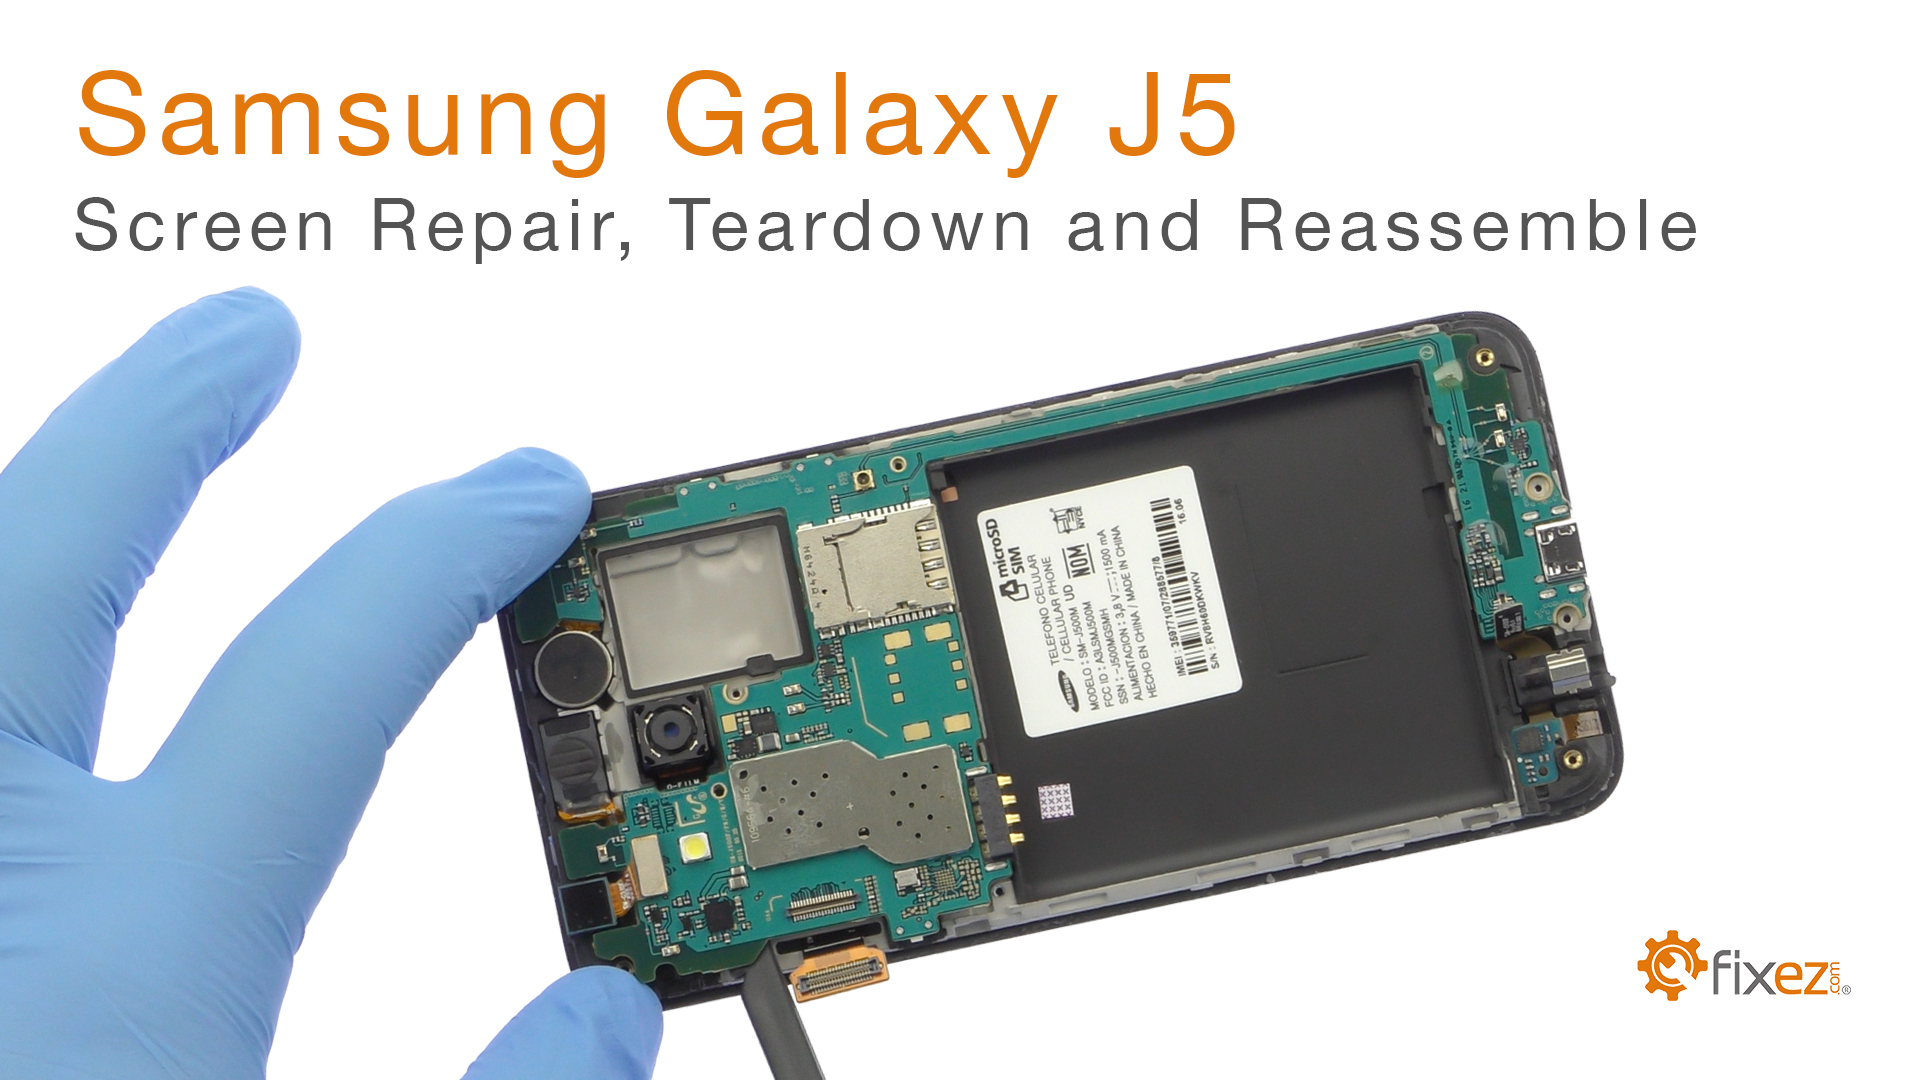 Samsung Galaxy J5 Screen Repair, Teardown and Reassemble